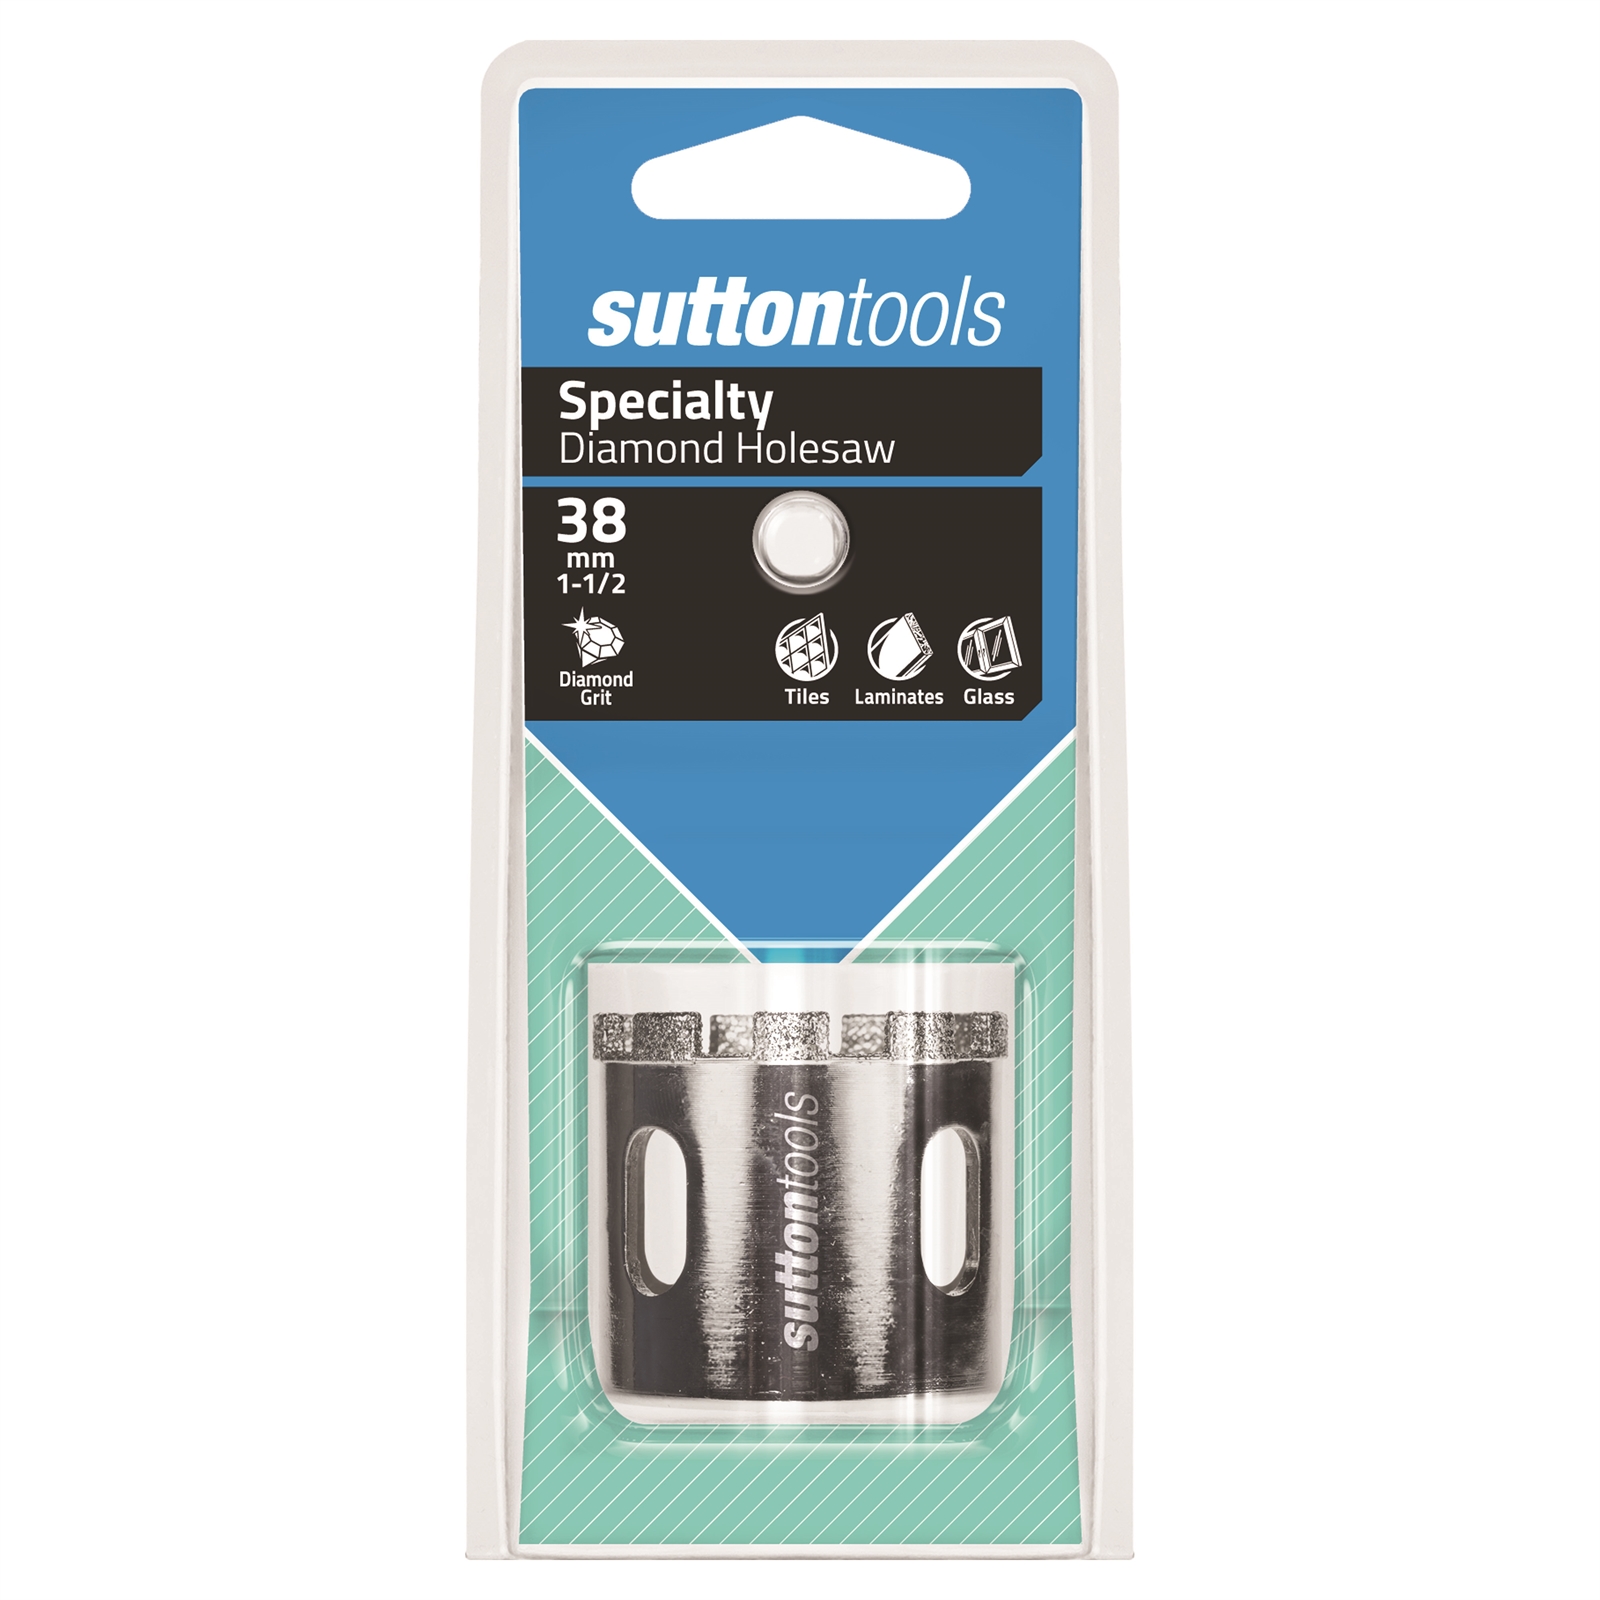 Sutton Tools 38mm Diamond Grit Holesaw